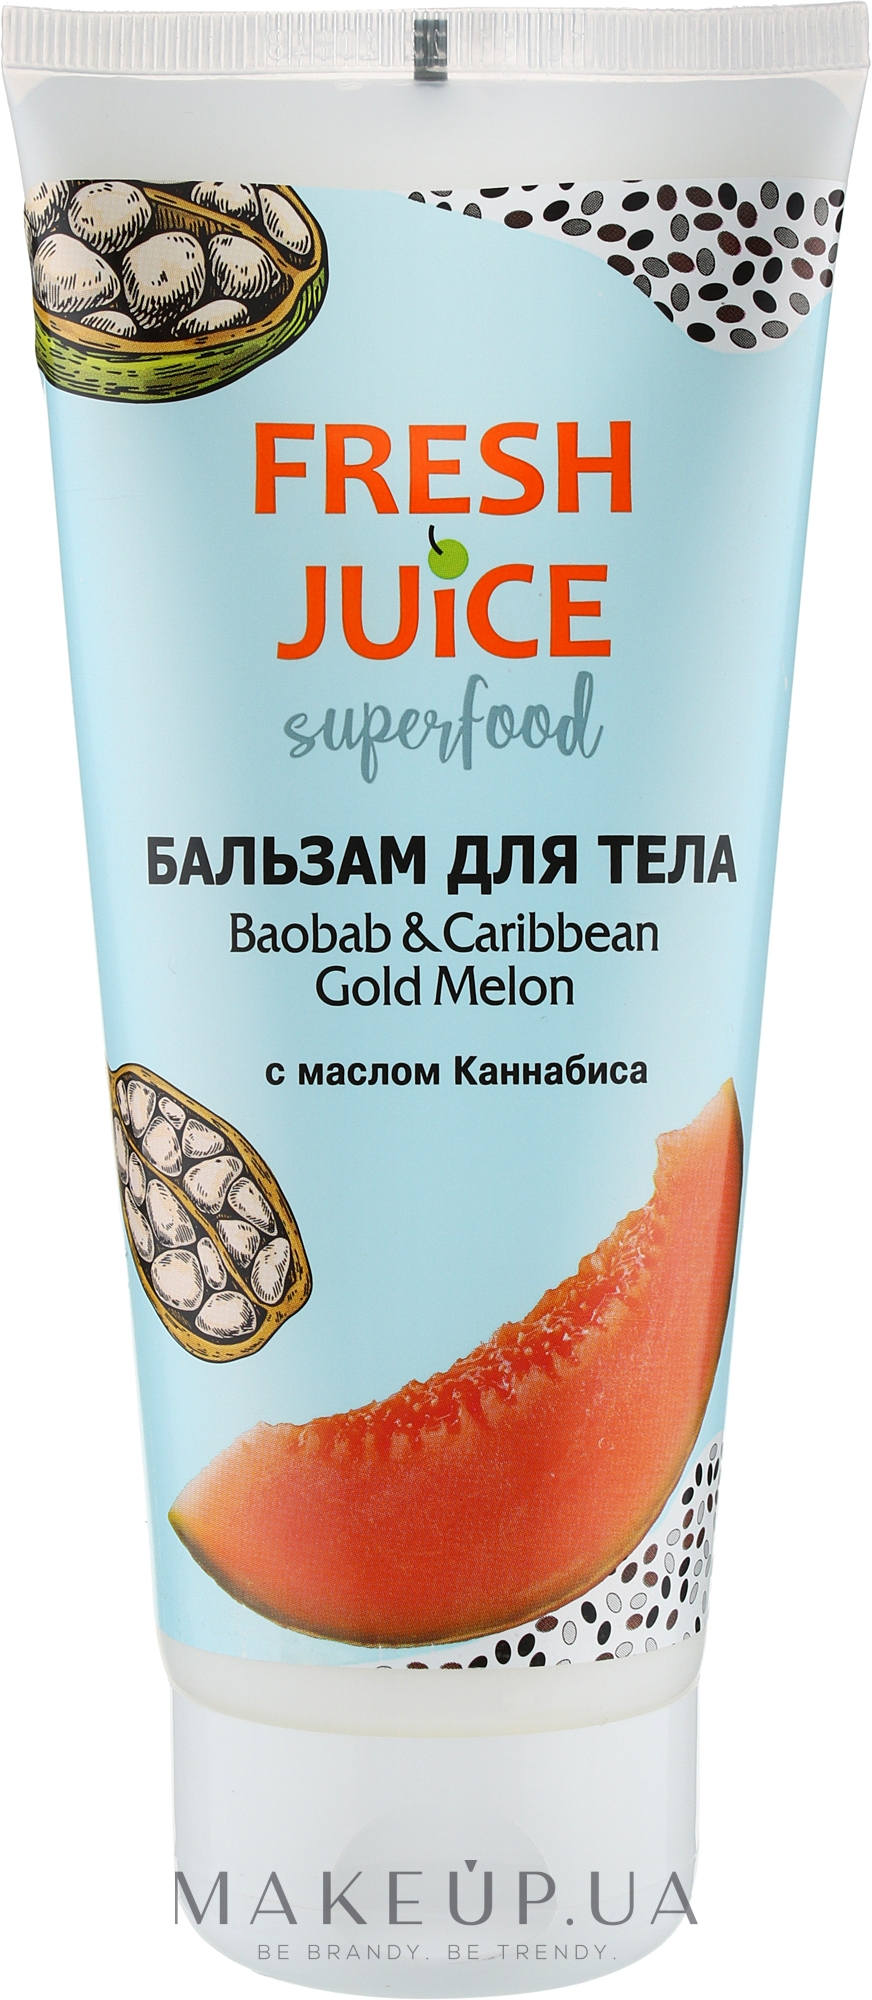 Бальзам для тела "Баобаб и Карибская золотая дыня" - Fresh Juice Superfood Baobab & Caribbean Gold Melon  — фото 200ml